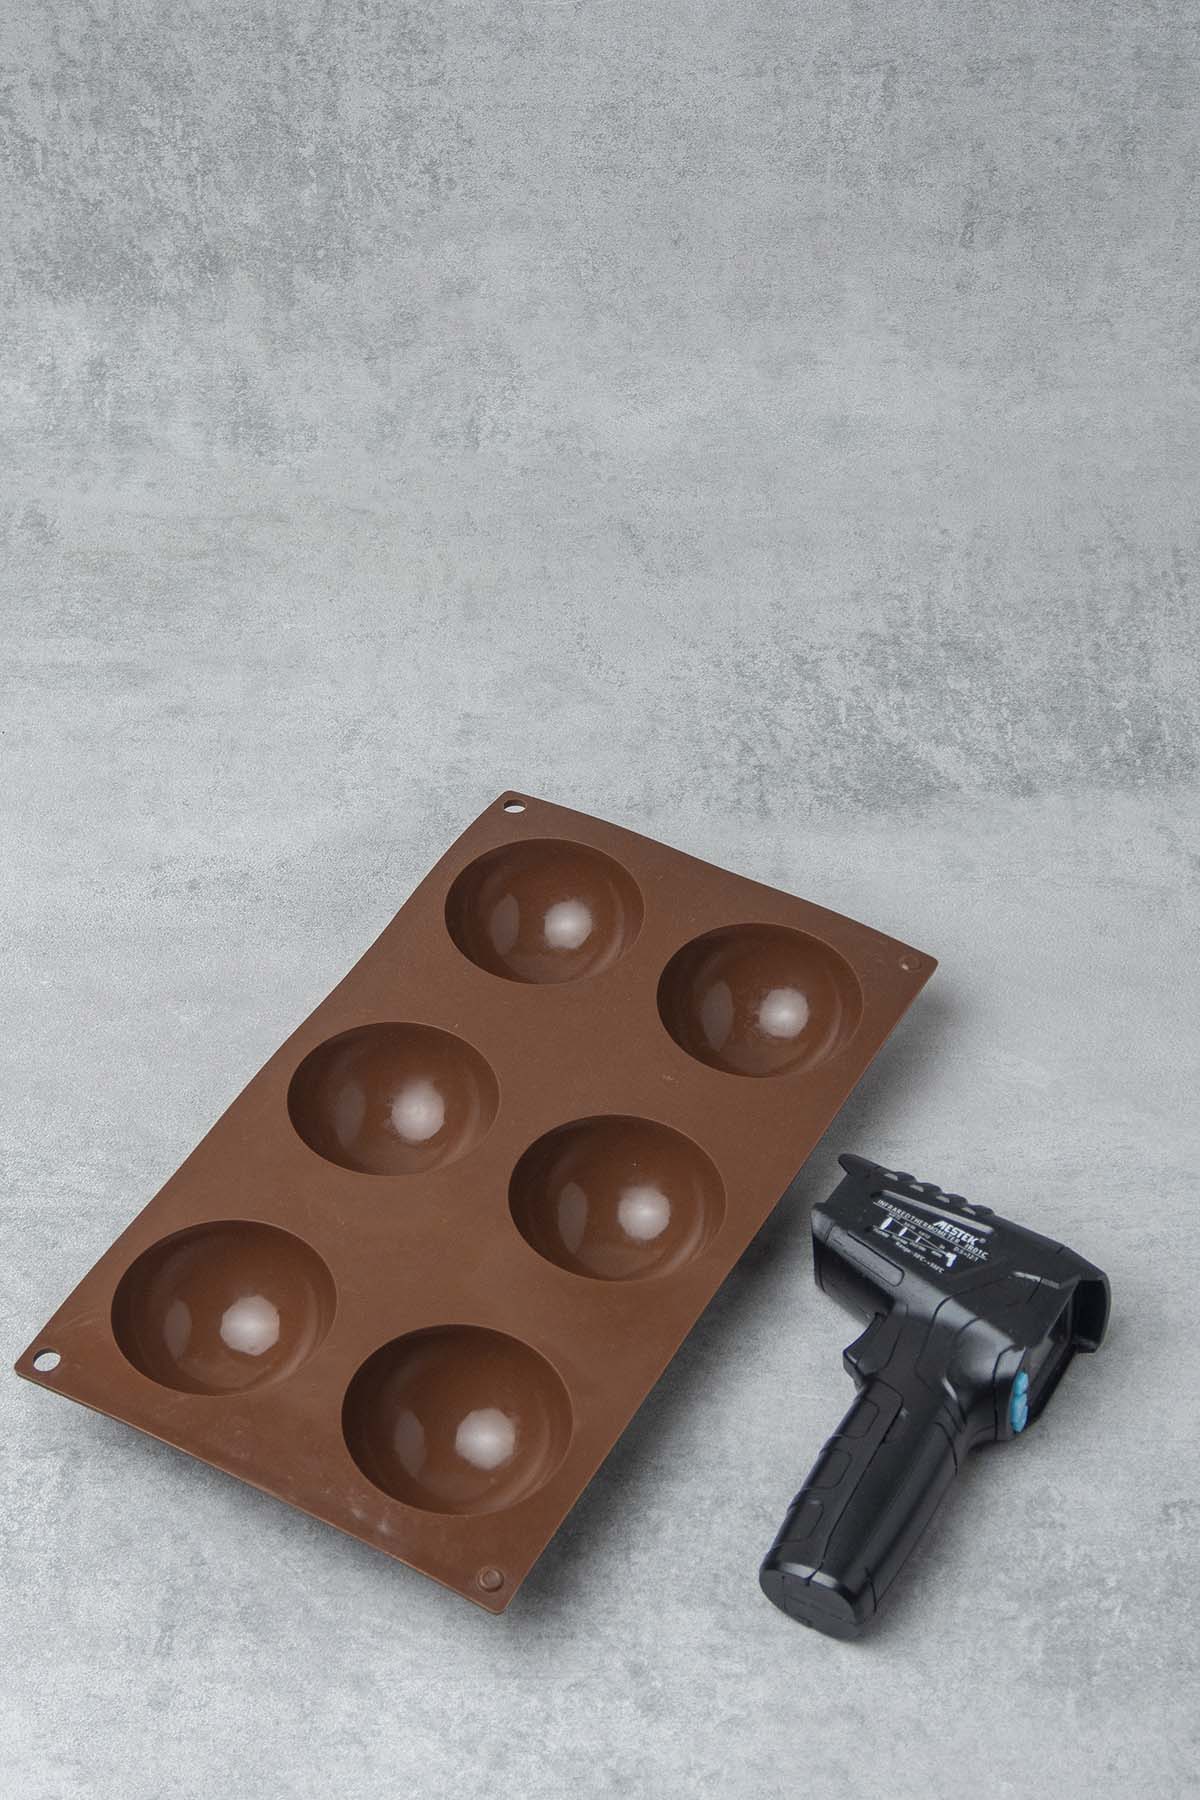 Chocolate bomb equipments